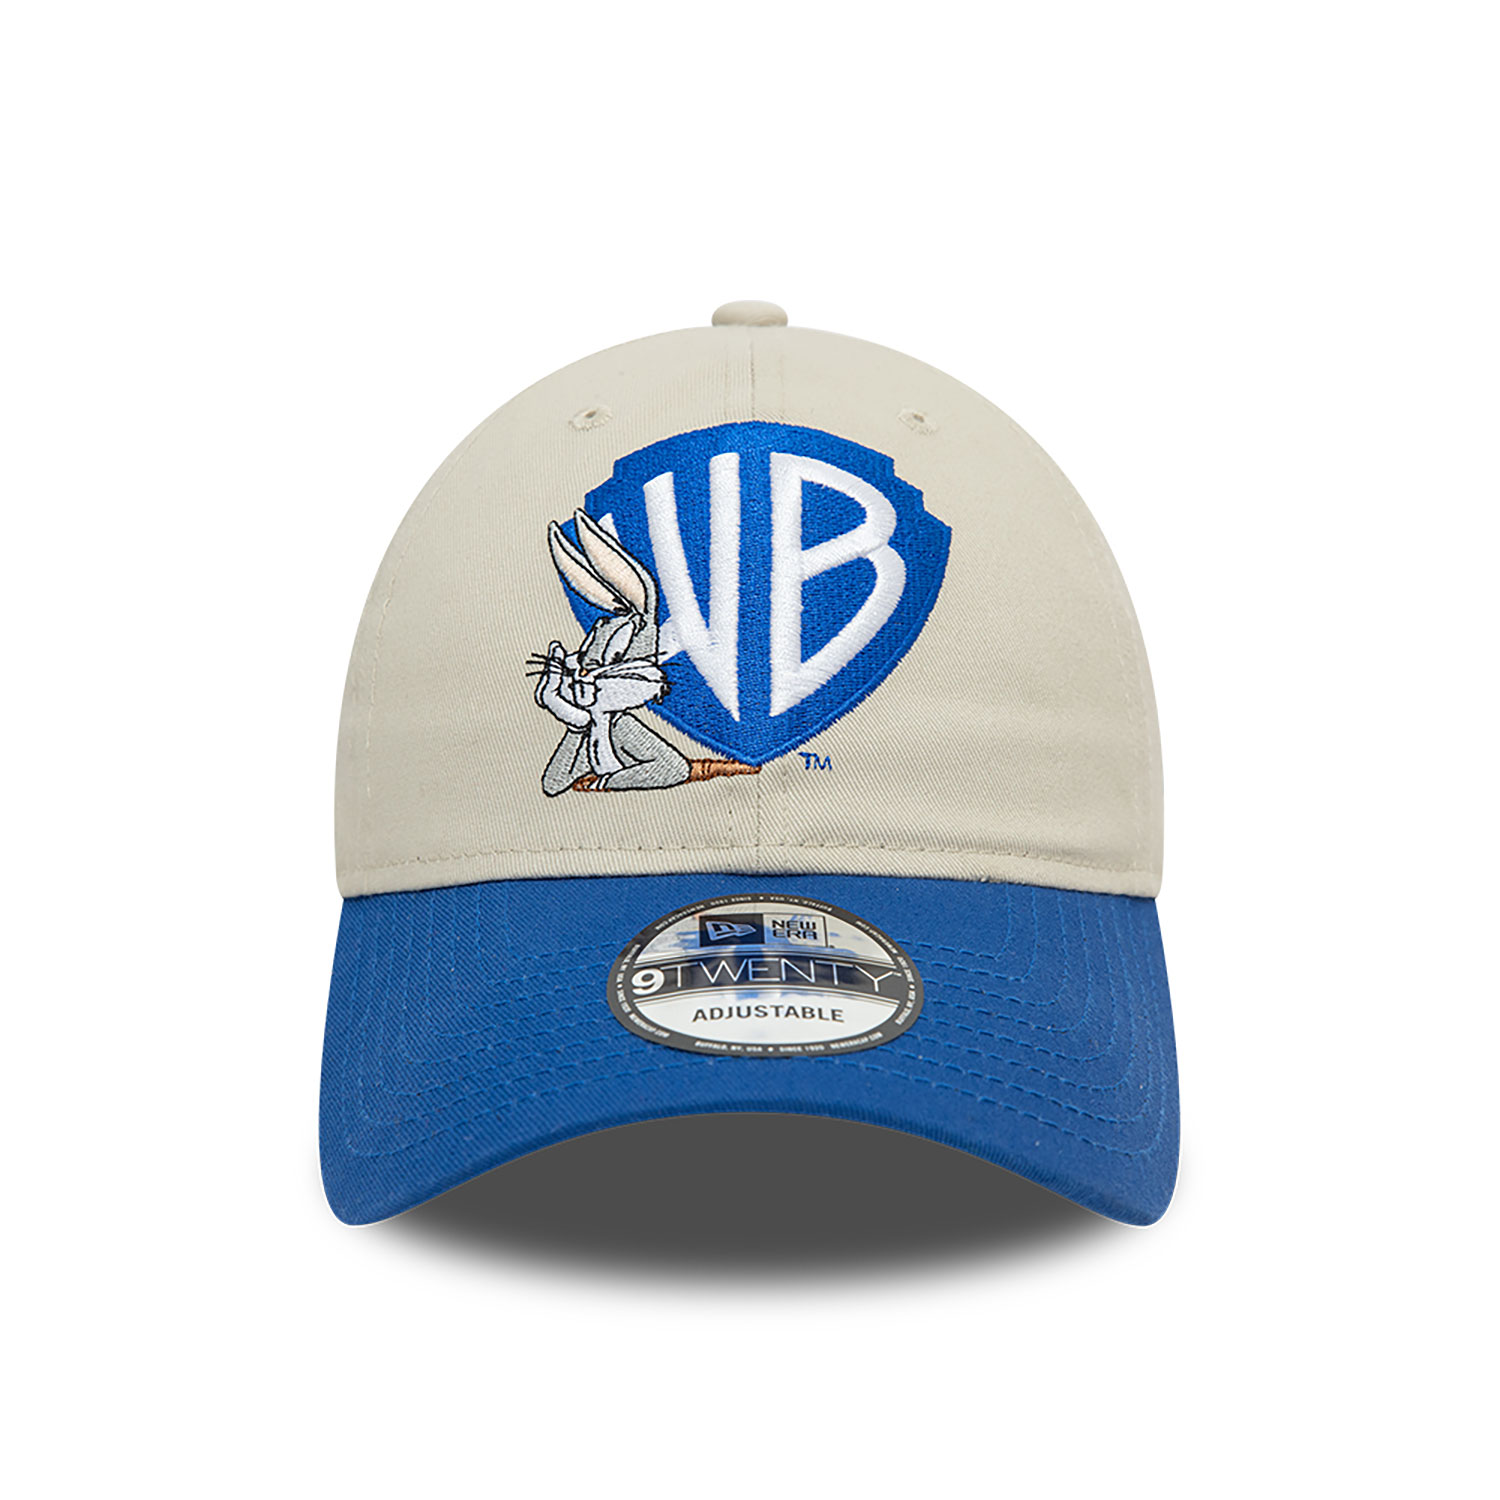 Warner Brothers Shield Logo Bugs Bunny Stone 9TWENTY Adjustable Cap